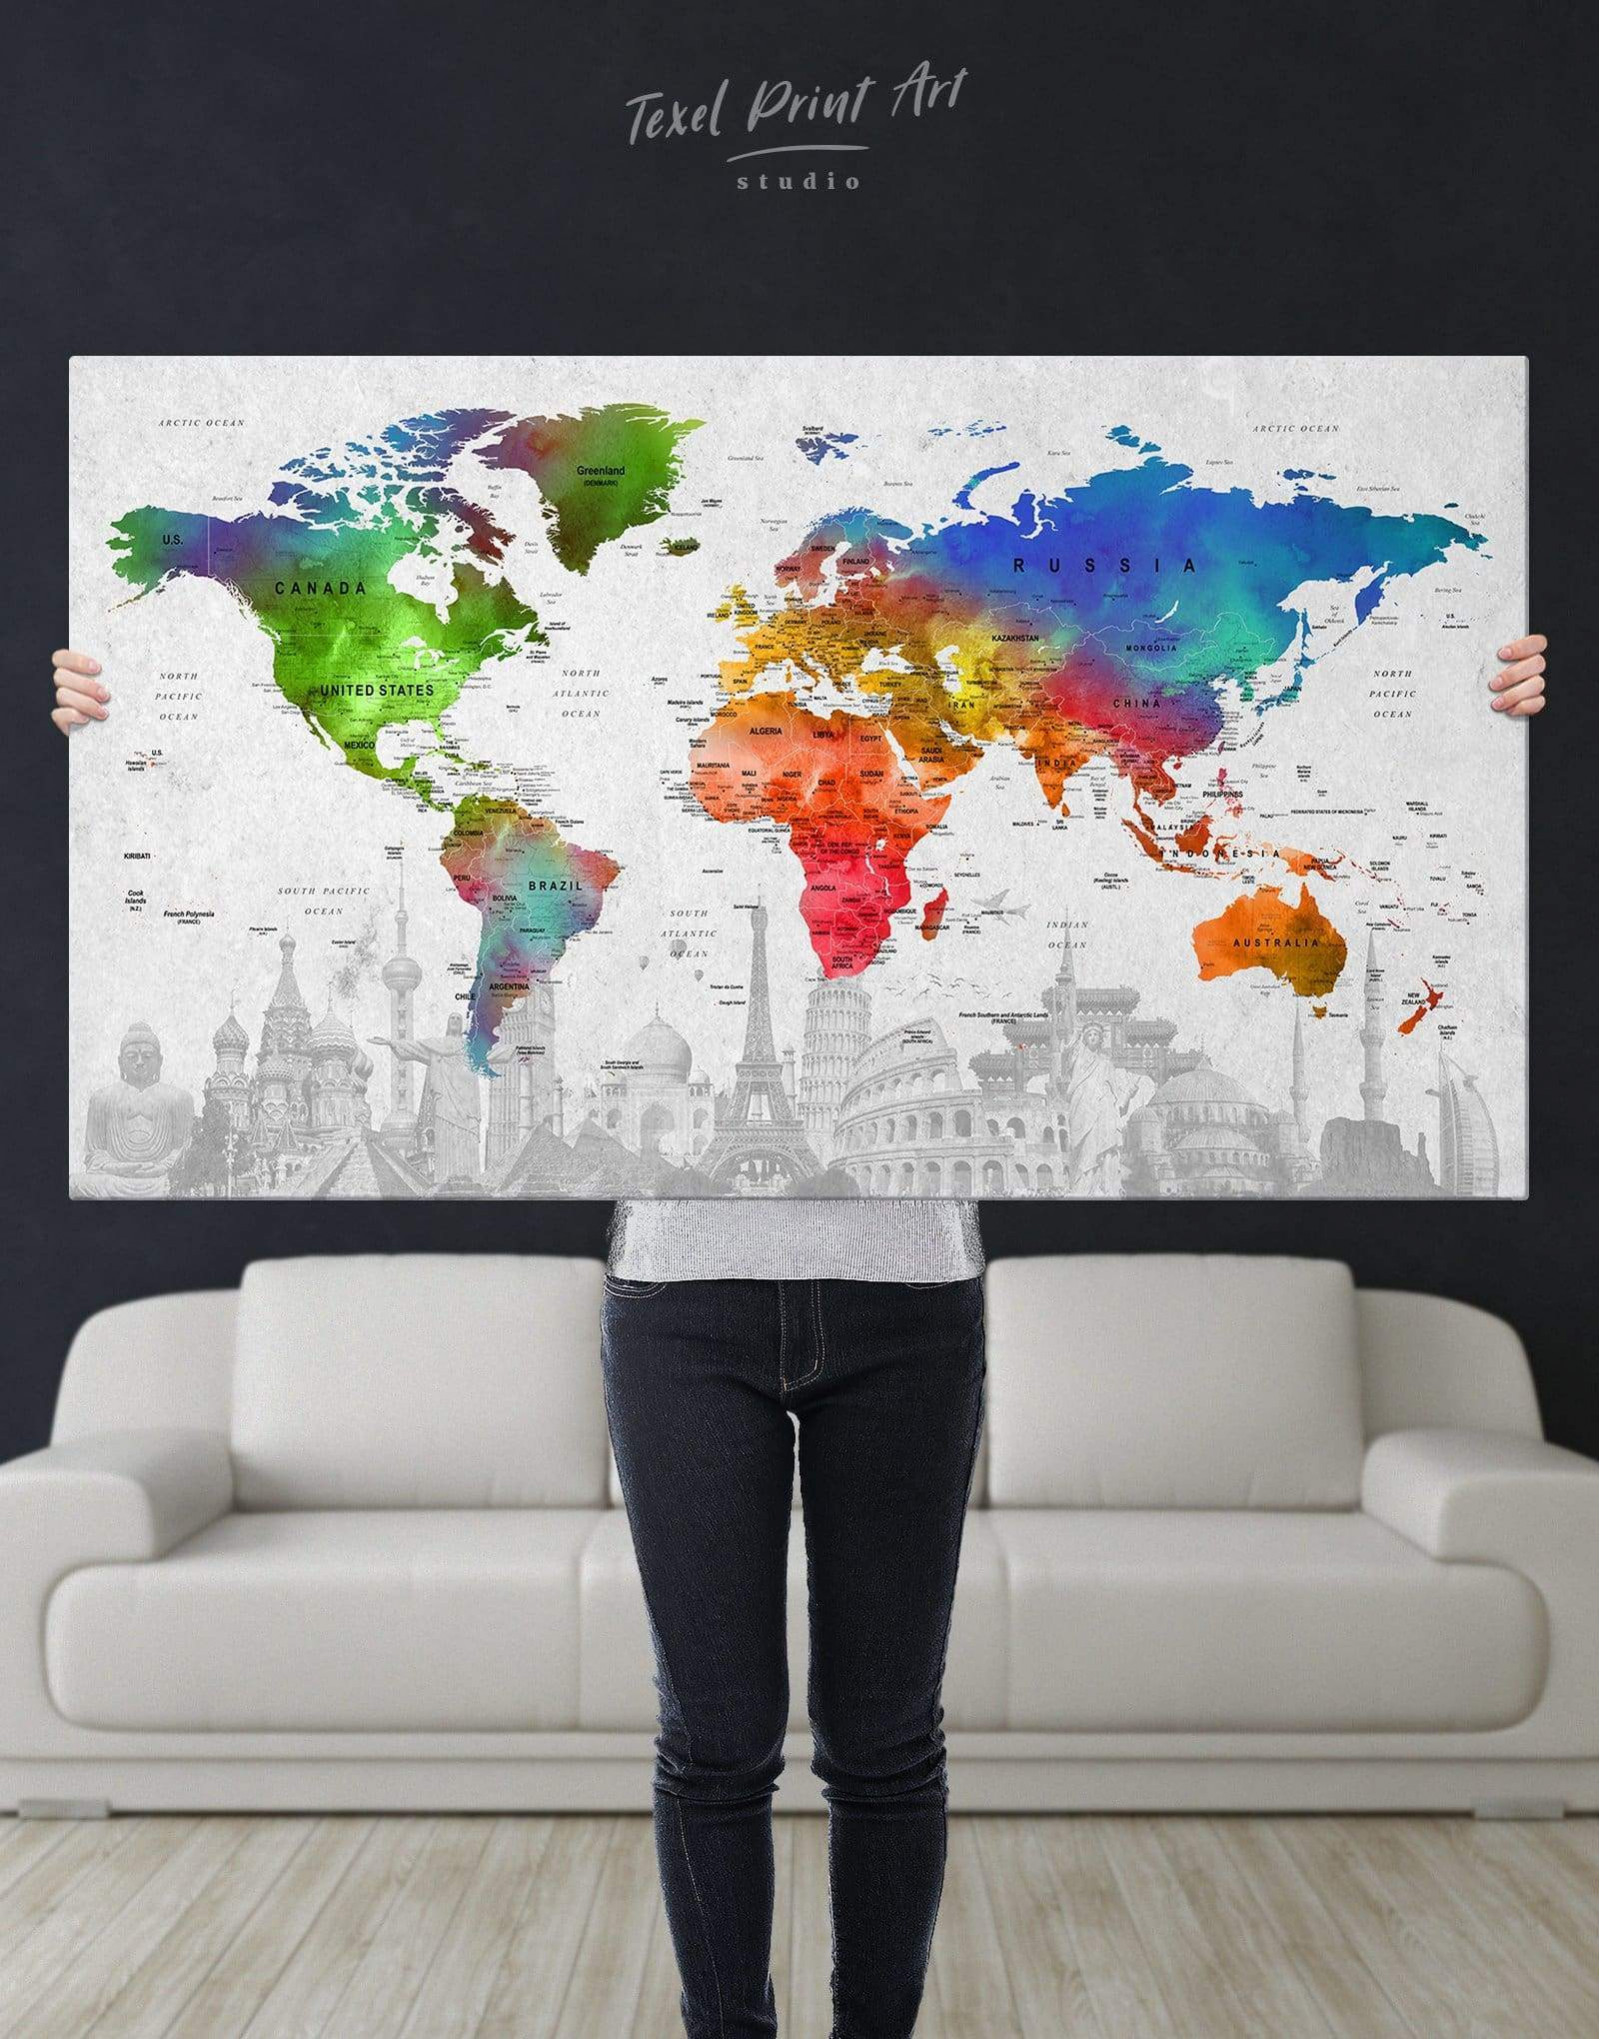 Watercolor World Map Artwork XLarge Push Pin World Map Canvas Print Multi Panel Wall Art Large Glittering Blue World Map Canvas Wall Art